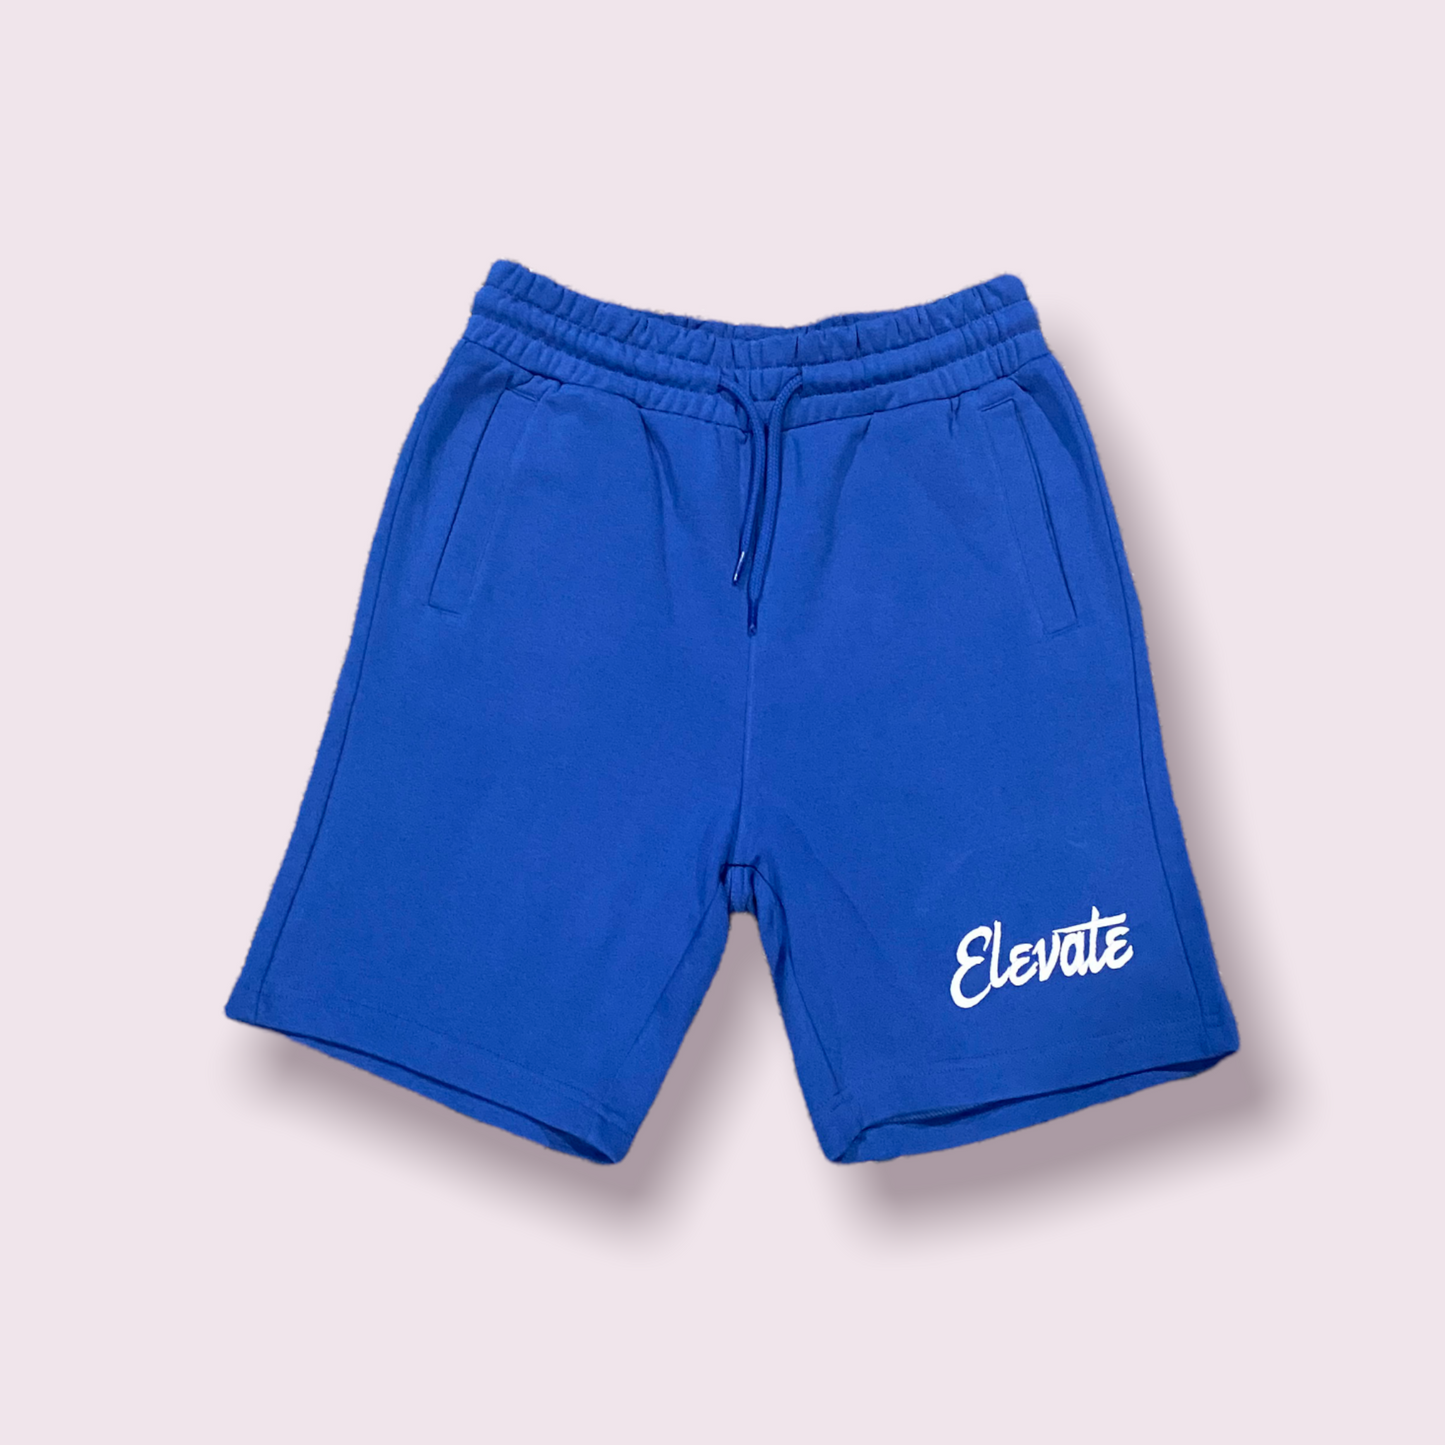 Elevate 2.0 Shorts